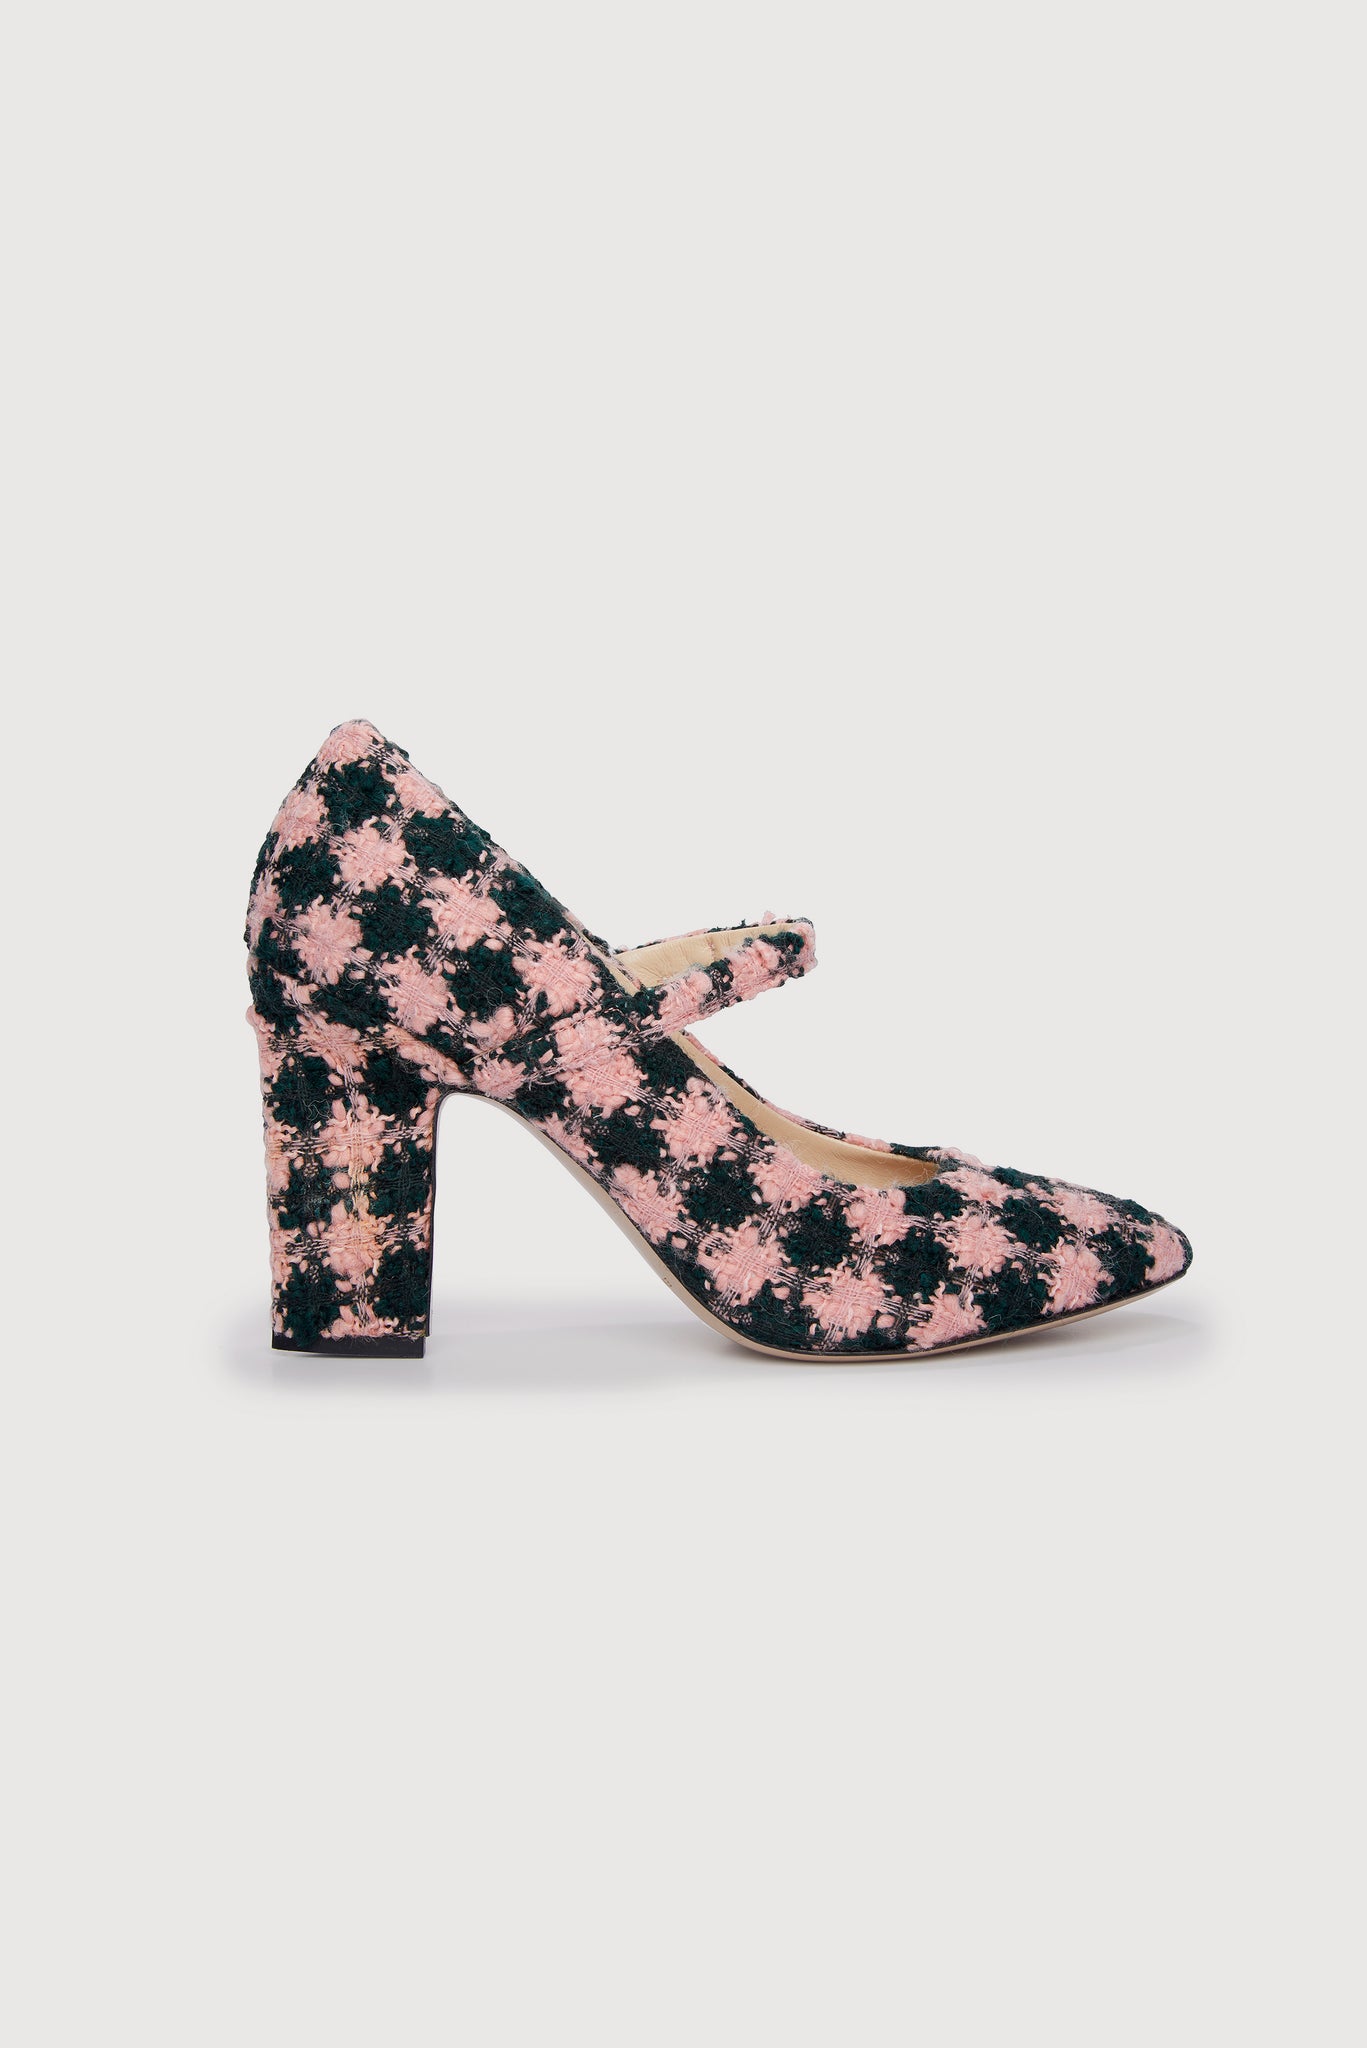  Orelia Pink & Green Tweed Mary-Jane Shoes | Emilia Wickstead